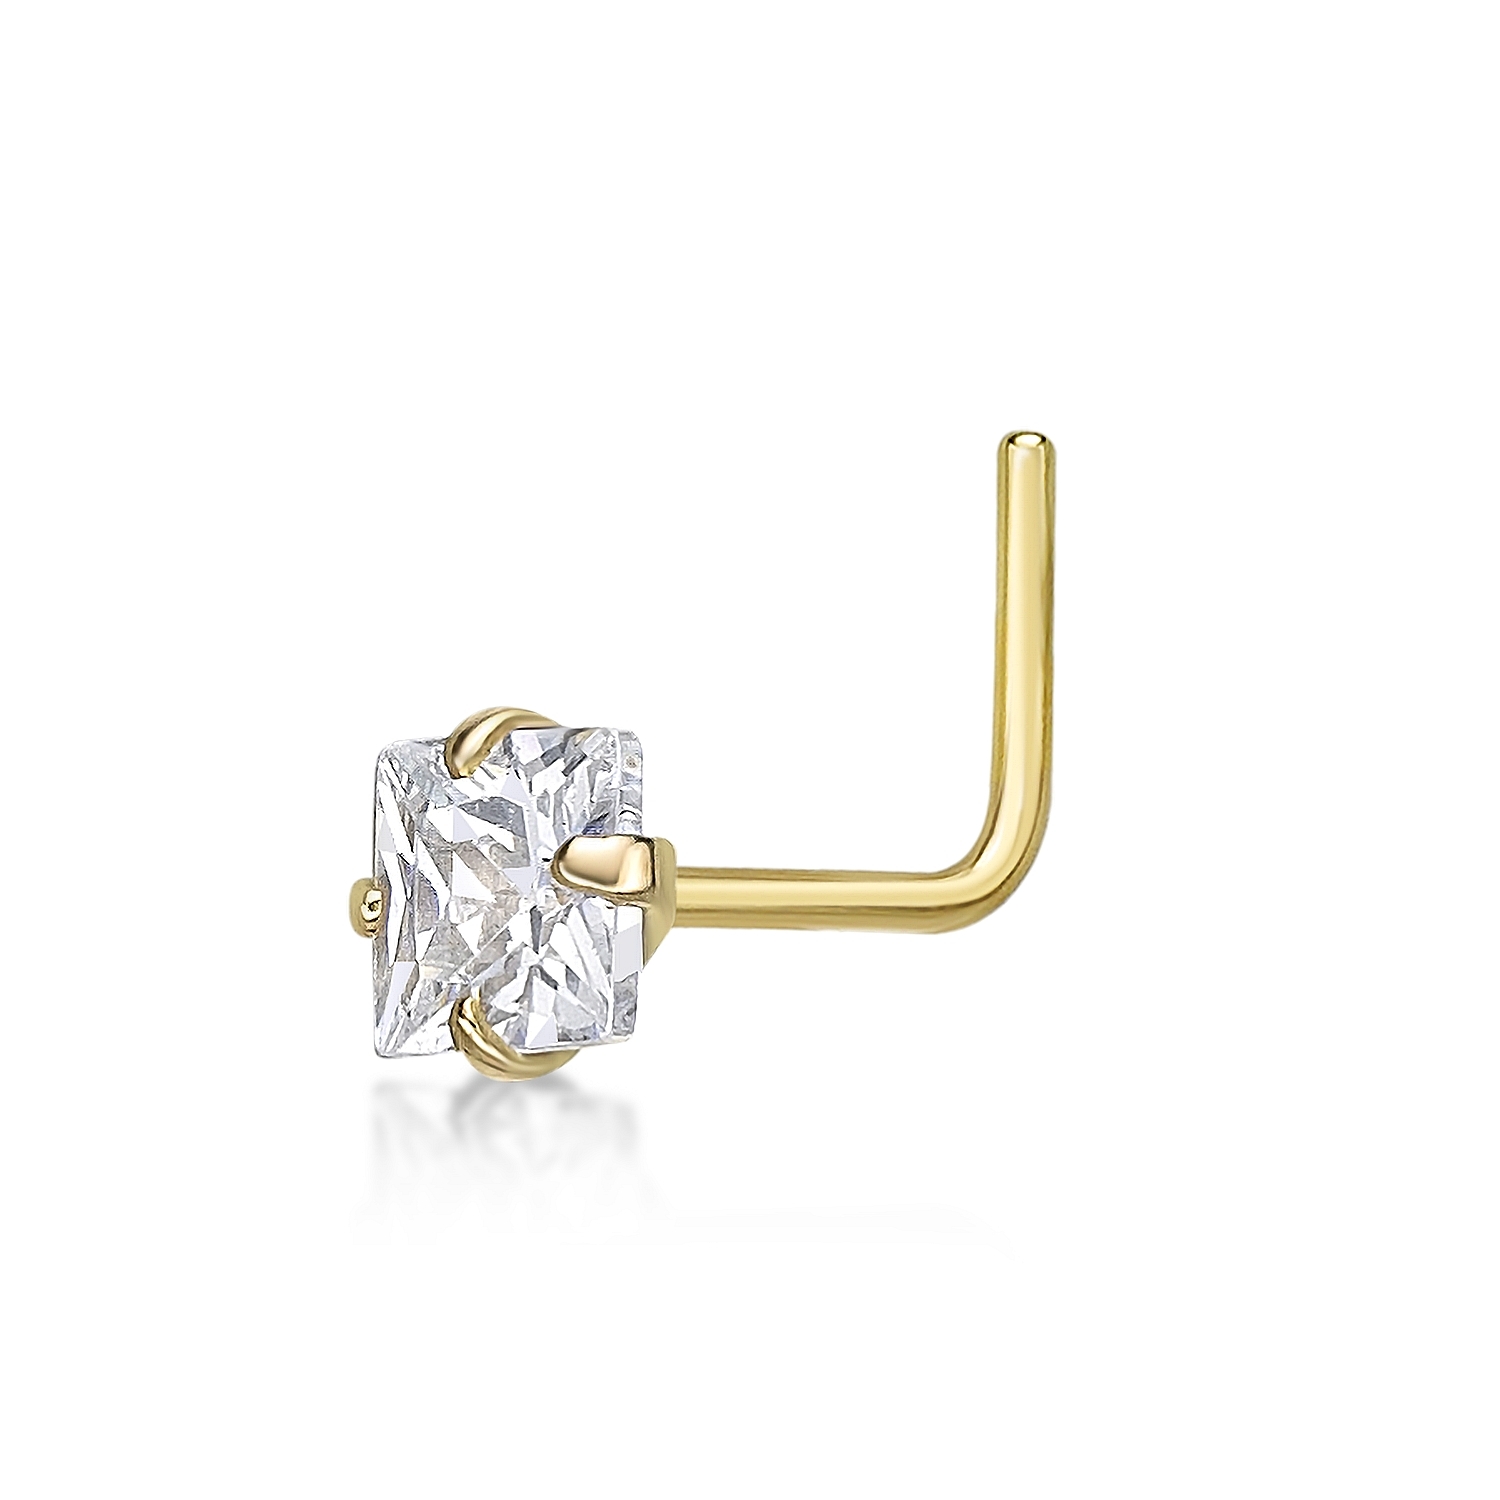 Lavari Jewelers Women's L-Shape Stud Nose Ring, 14K Yellow Gold, 3 MM Cubic Zirconia, 20 Gauge